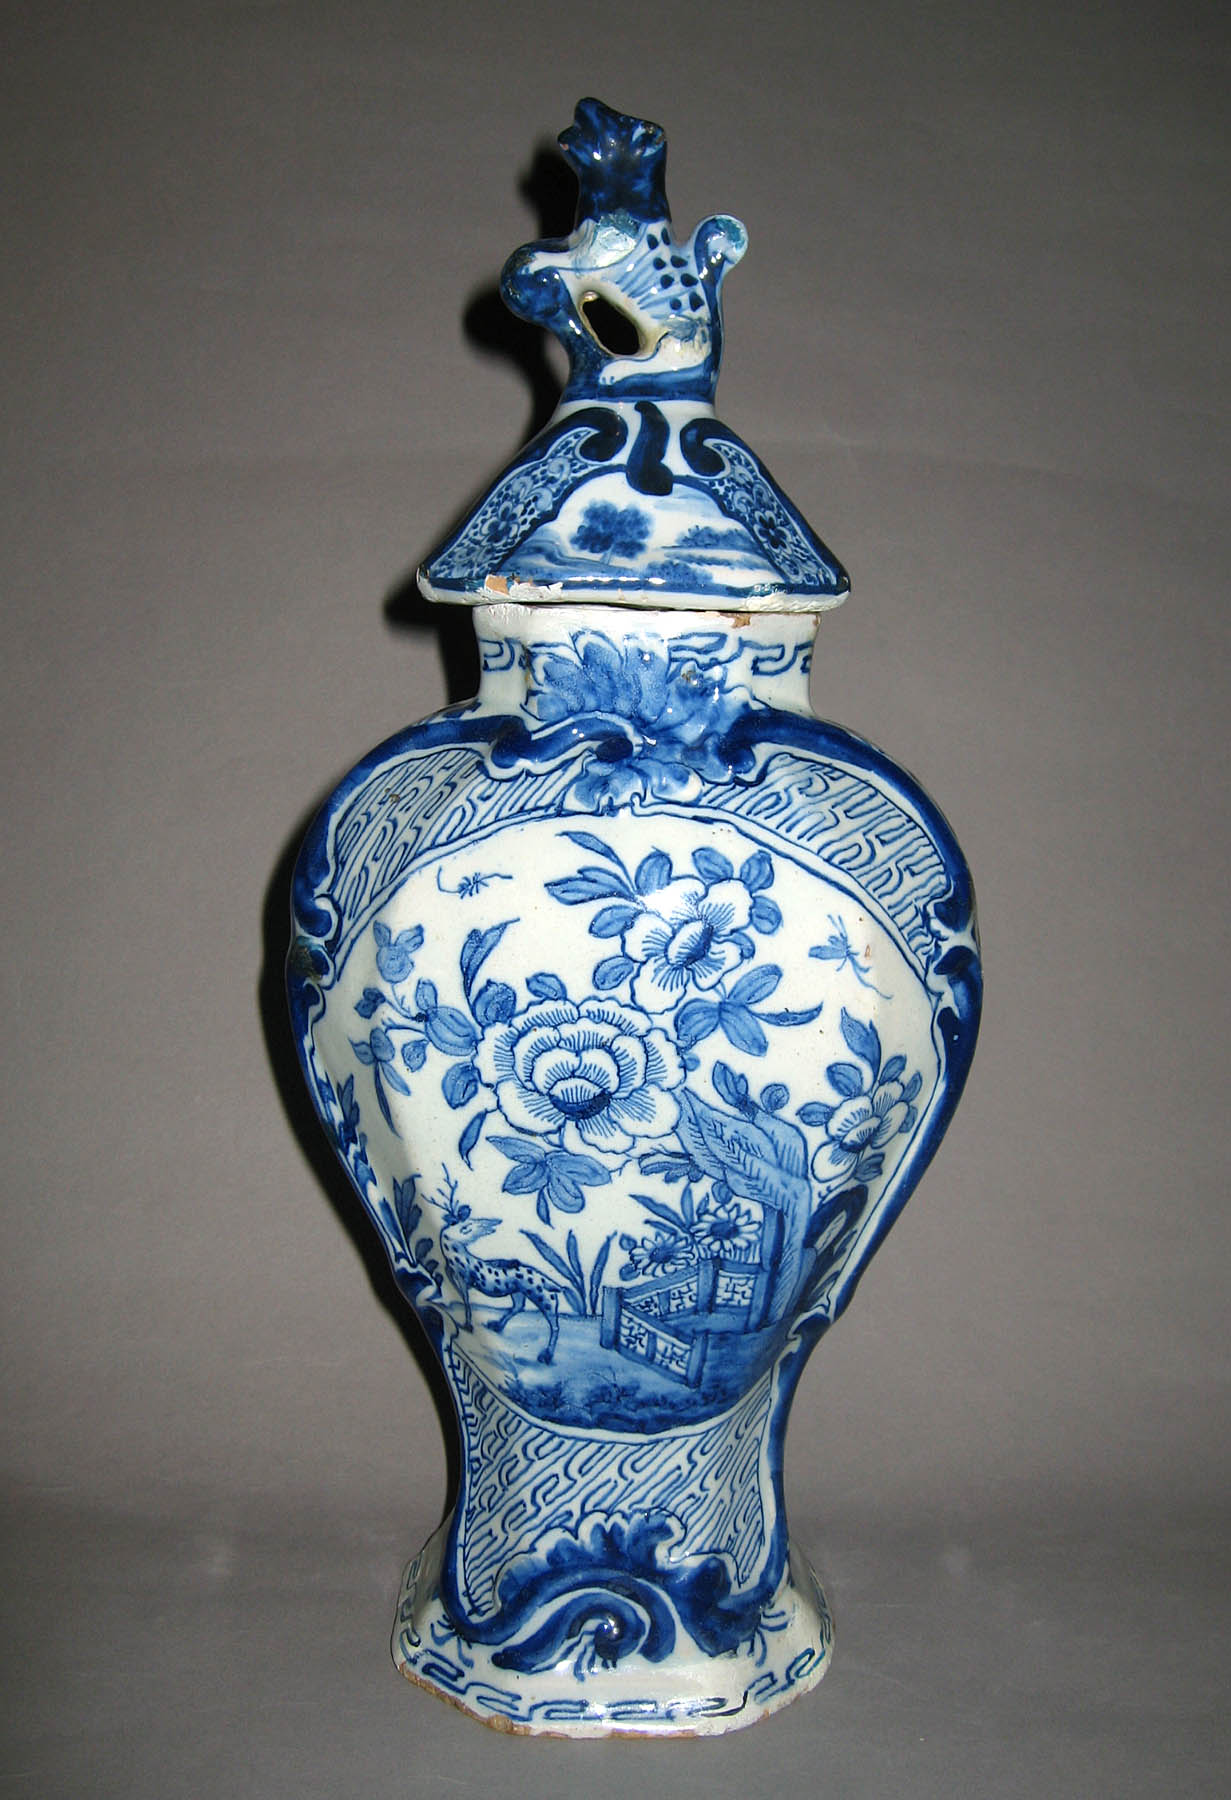 1960.0084.003 A, B Delft covered vase